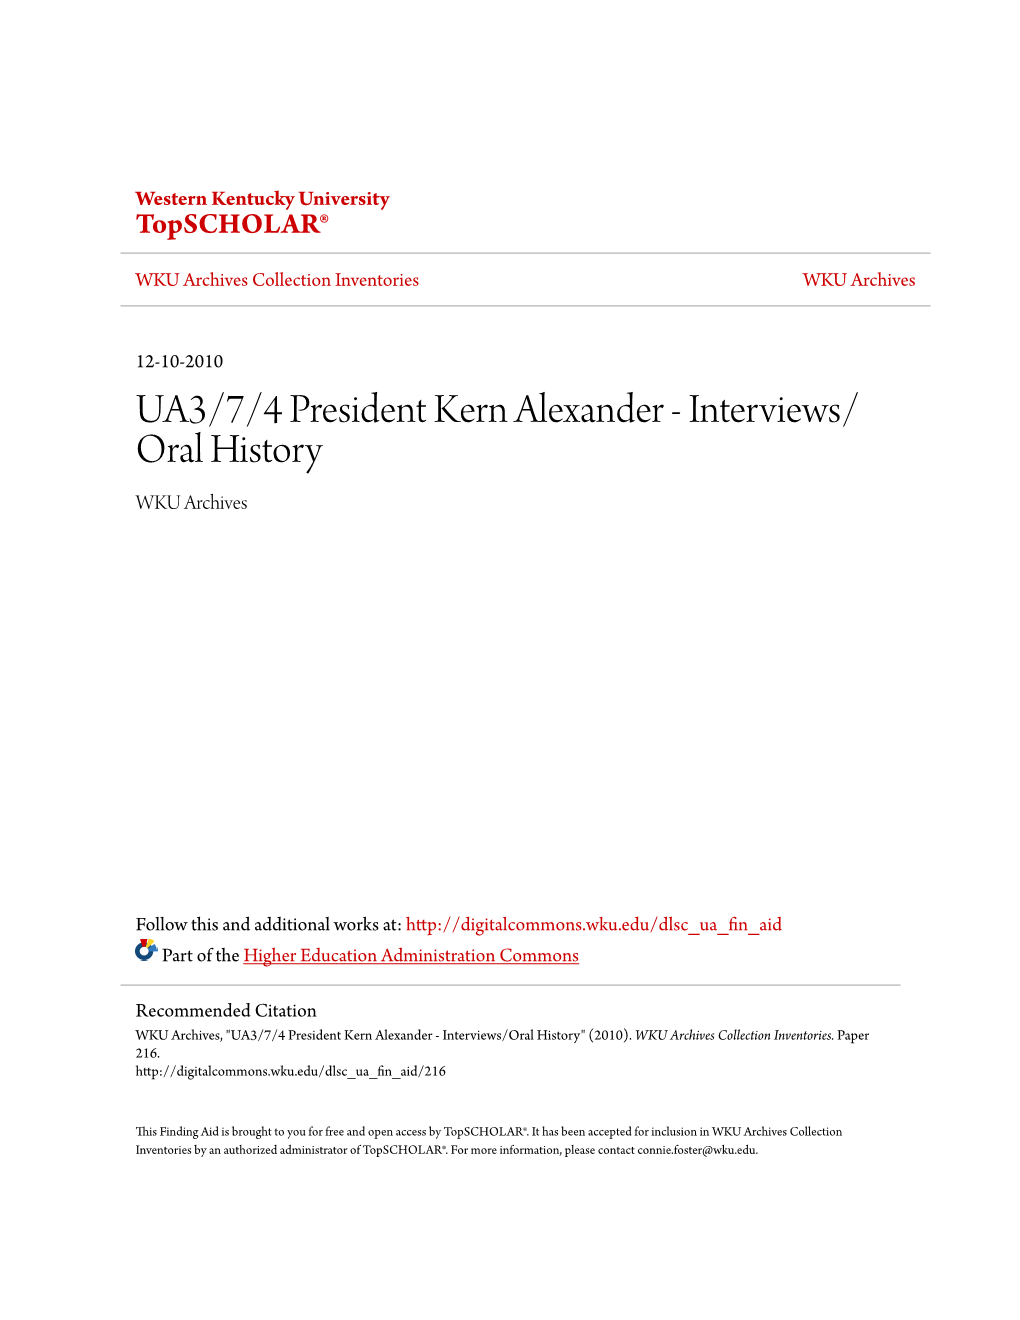 UA3/7/4 President Kern Alexander - Interviews/ Oral History WKU Archives